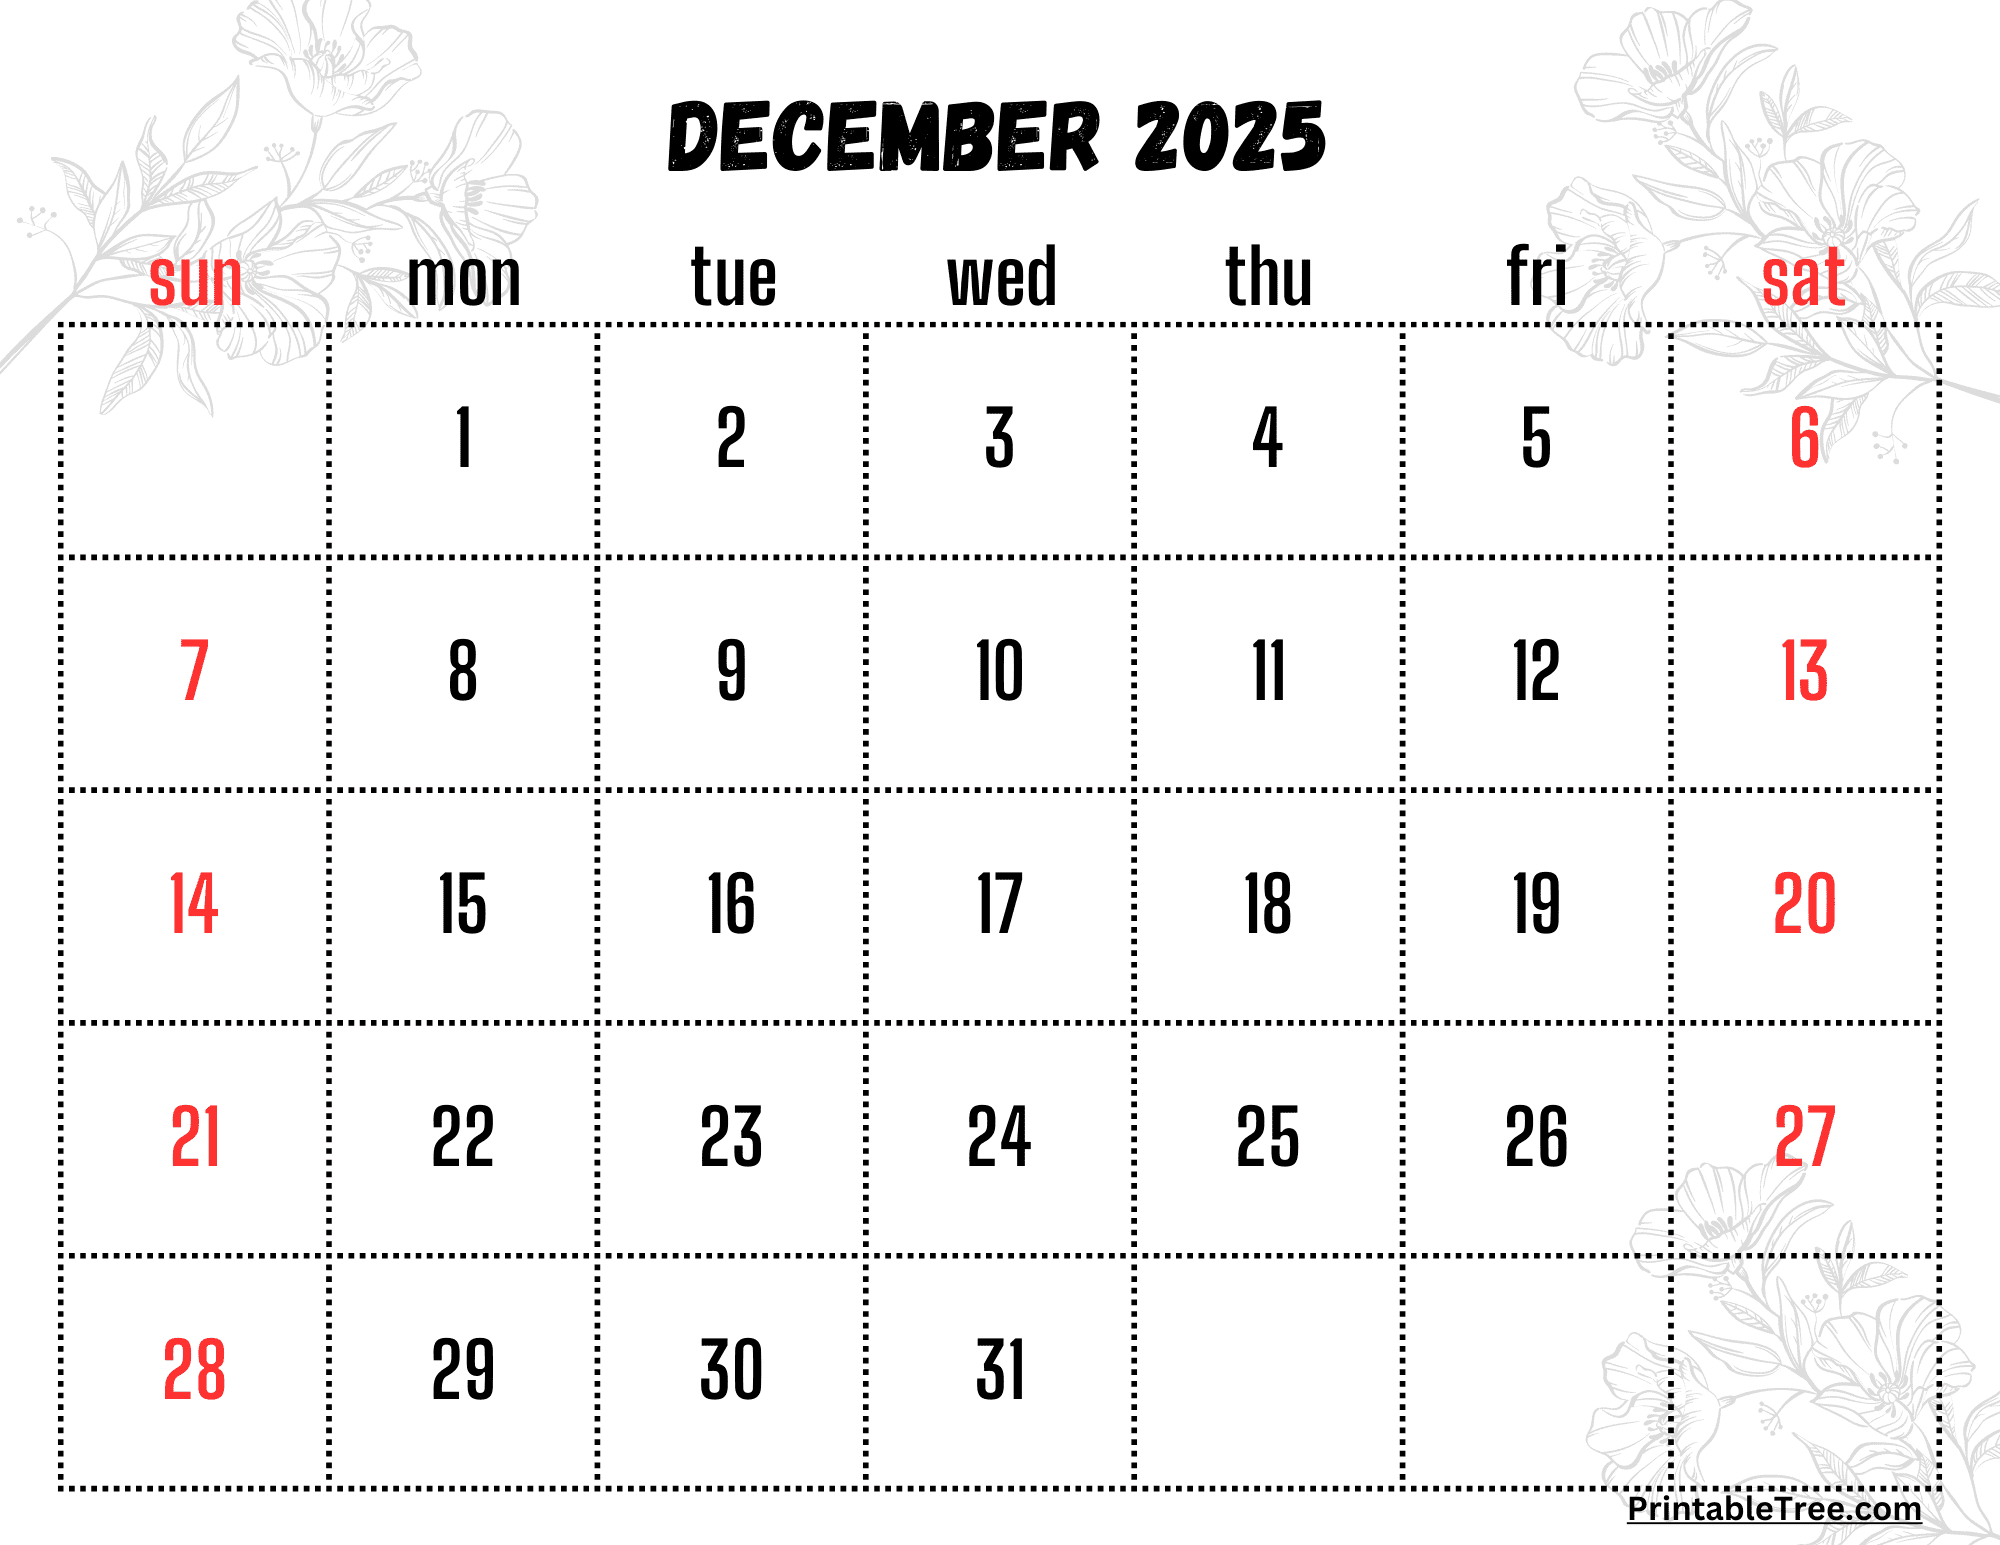 December 2025 Calendar Floral